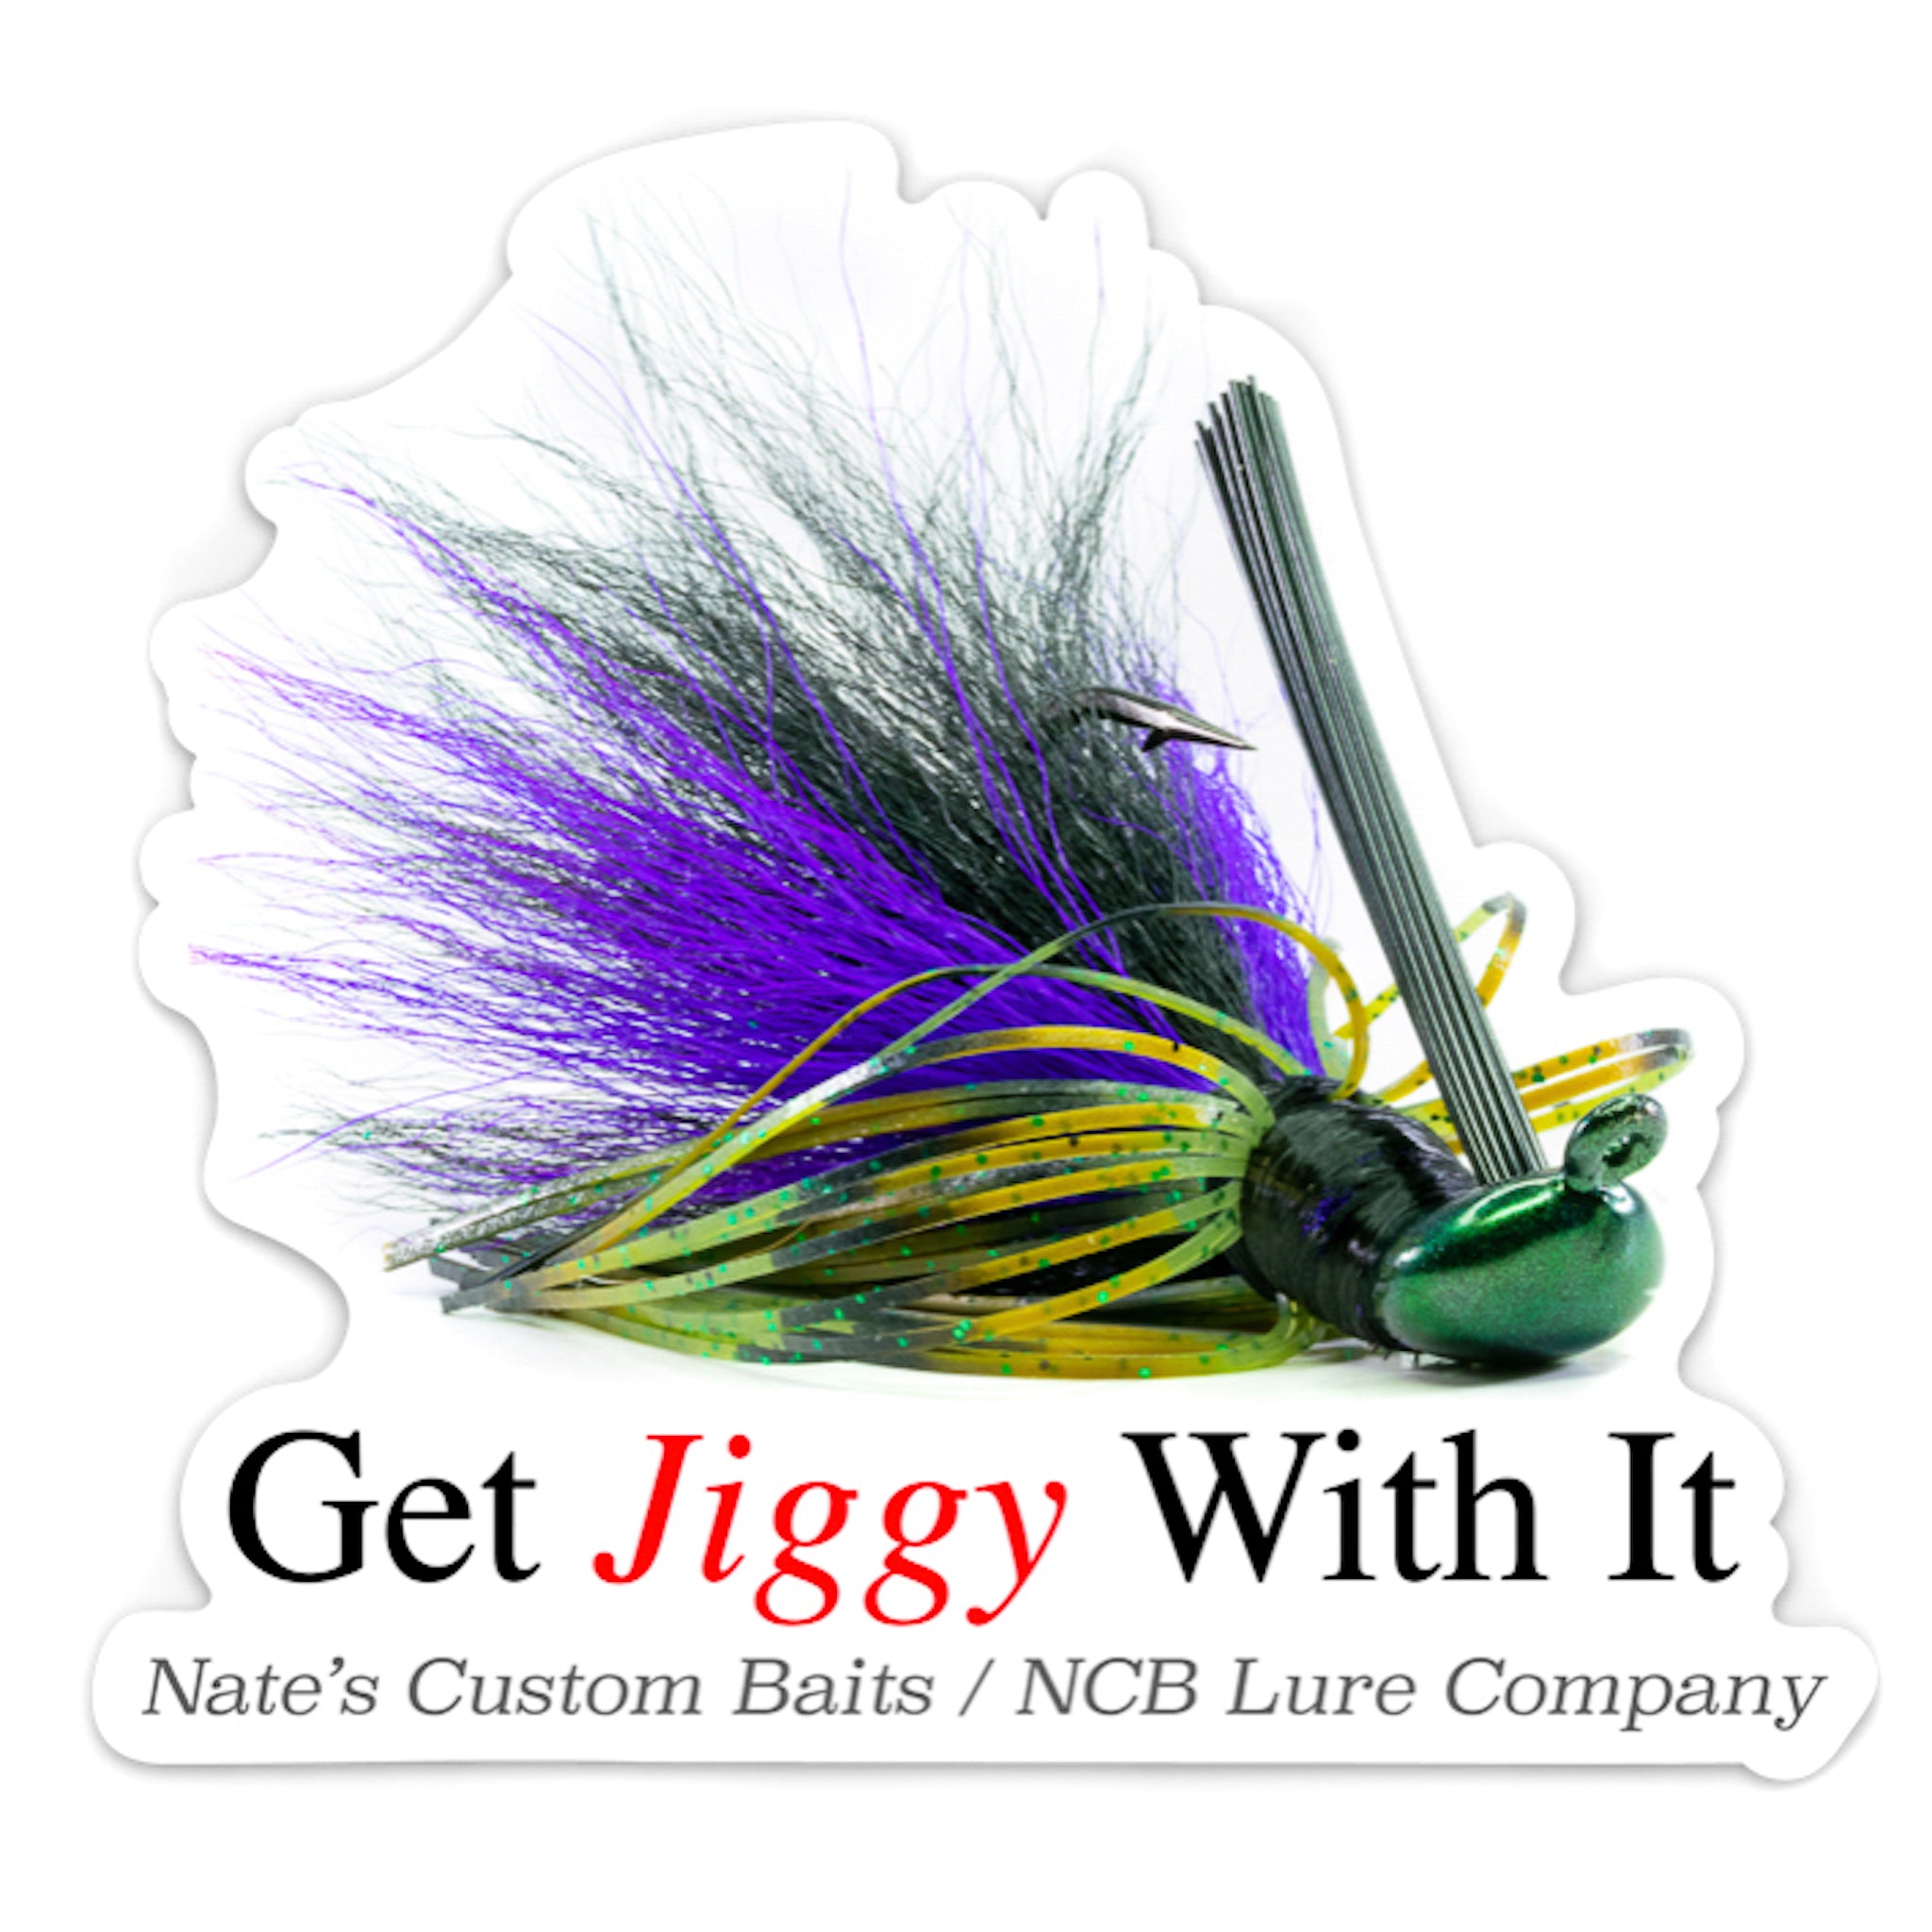 June Bug Tackle Co. – Custom made fishing tackle